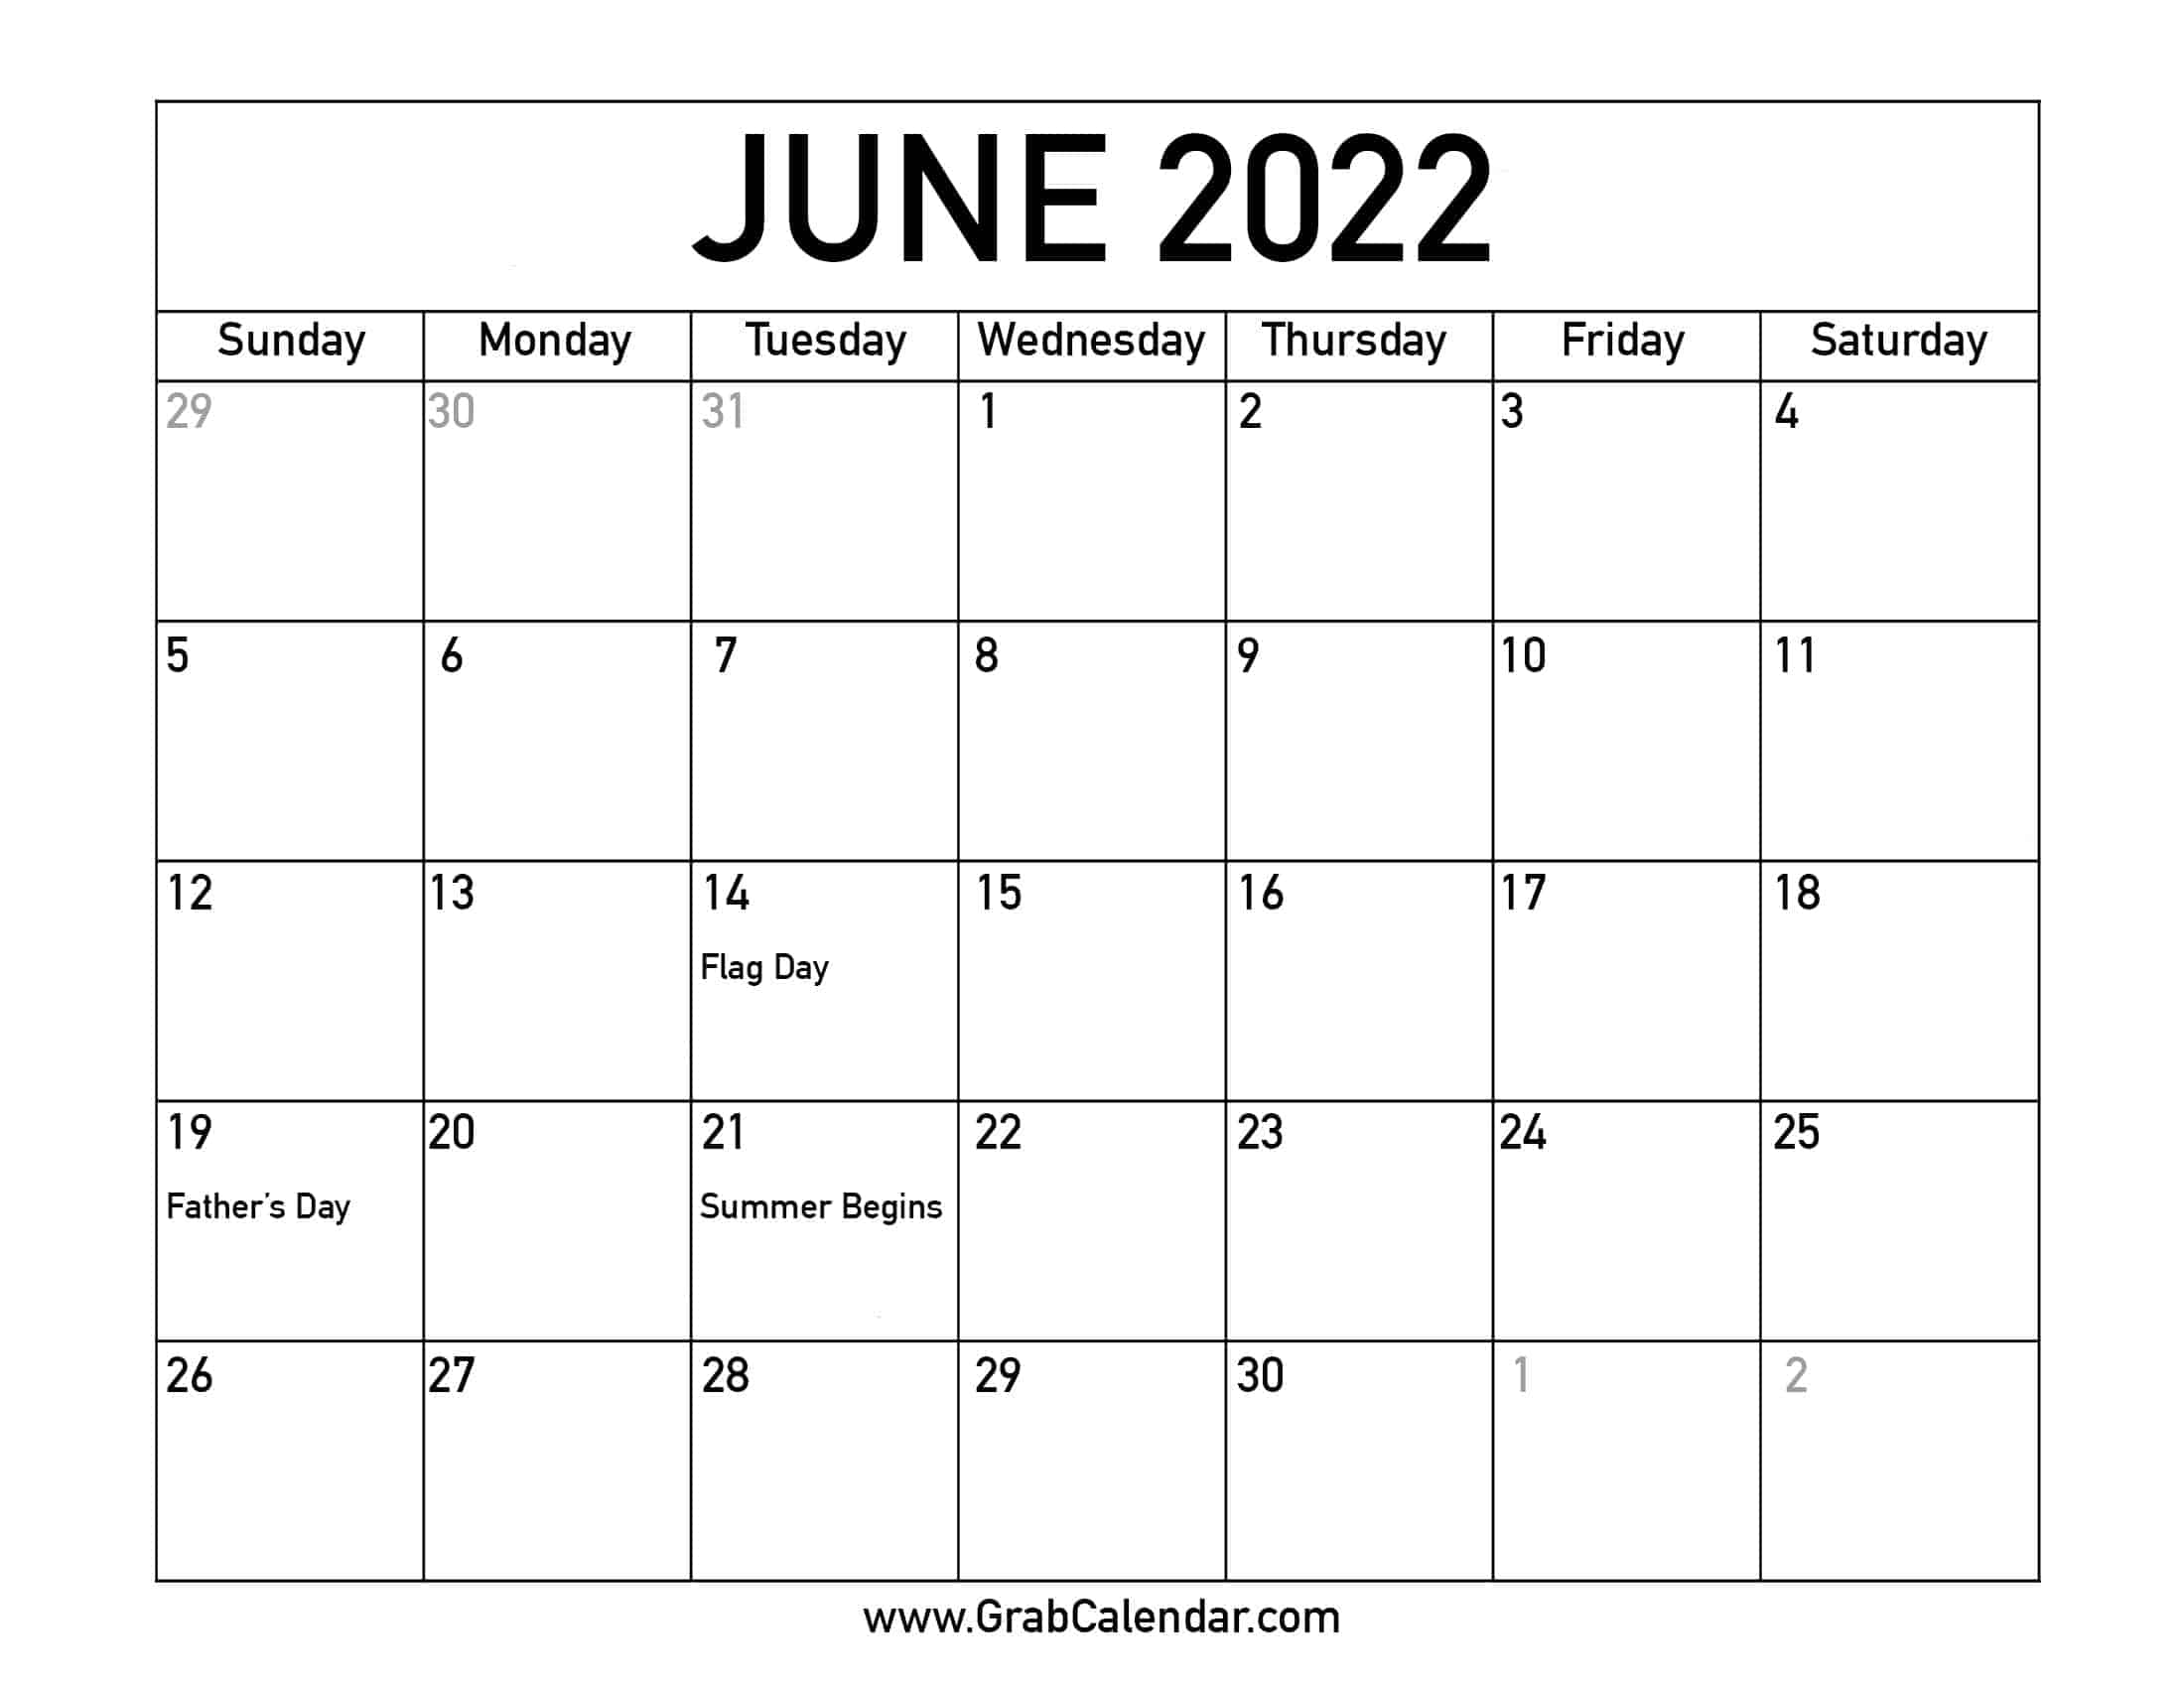 June 2022 Calendar With Holidays Printable June 2022 Calendar